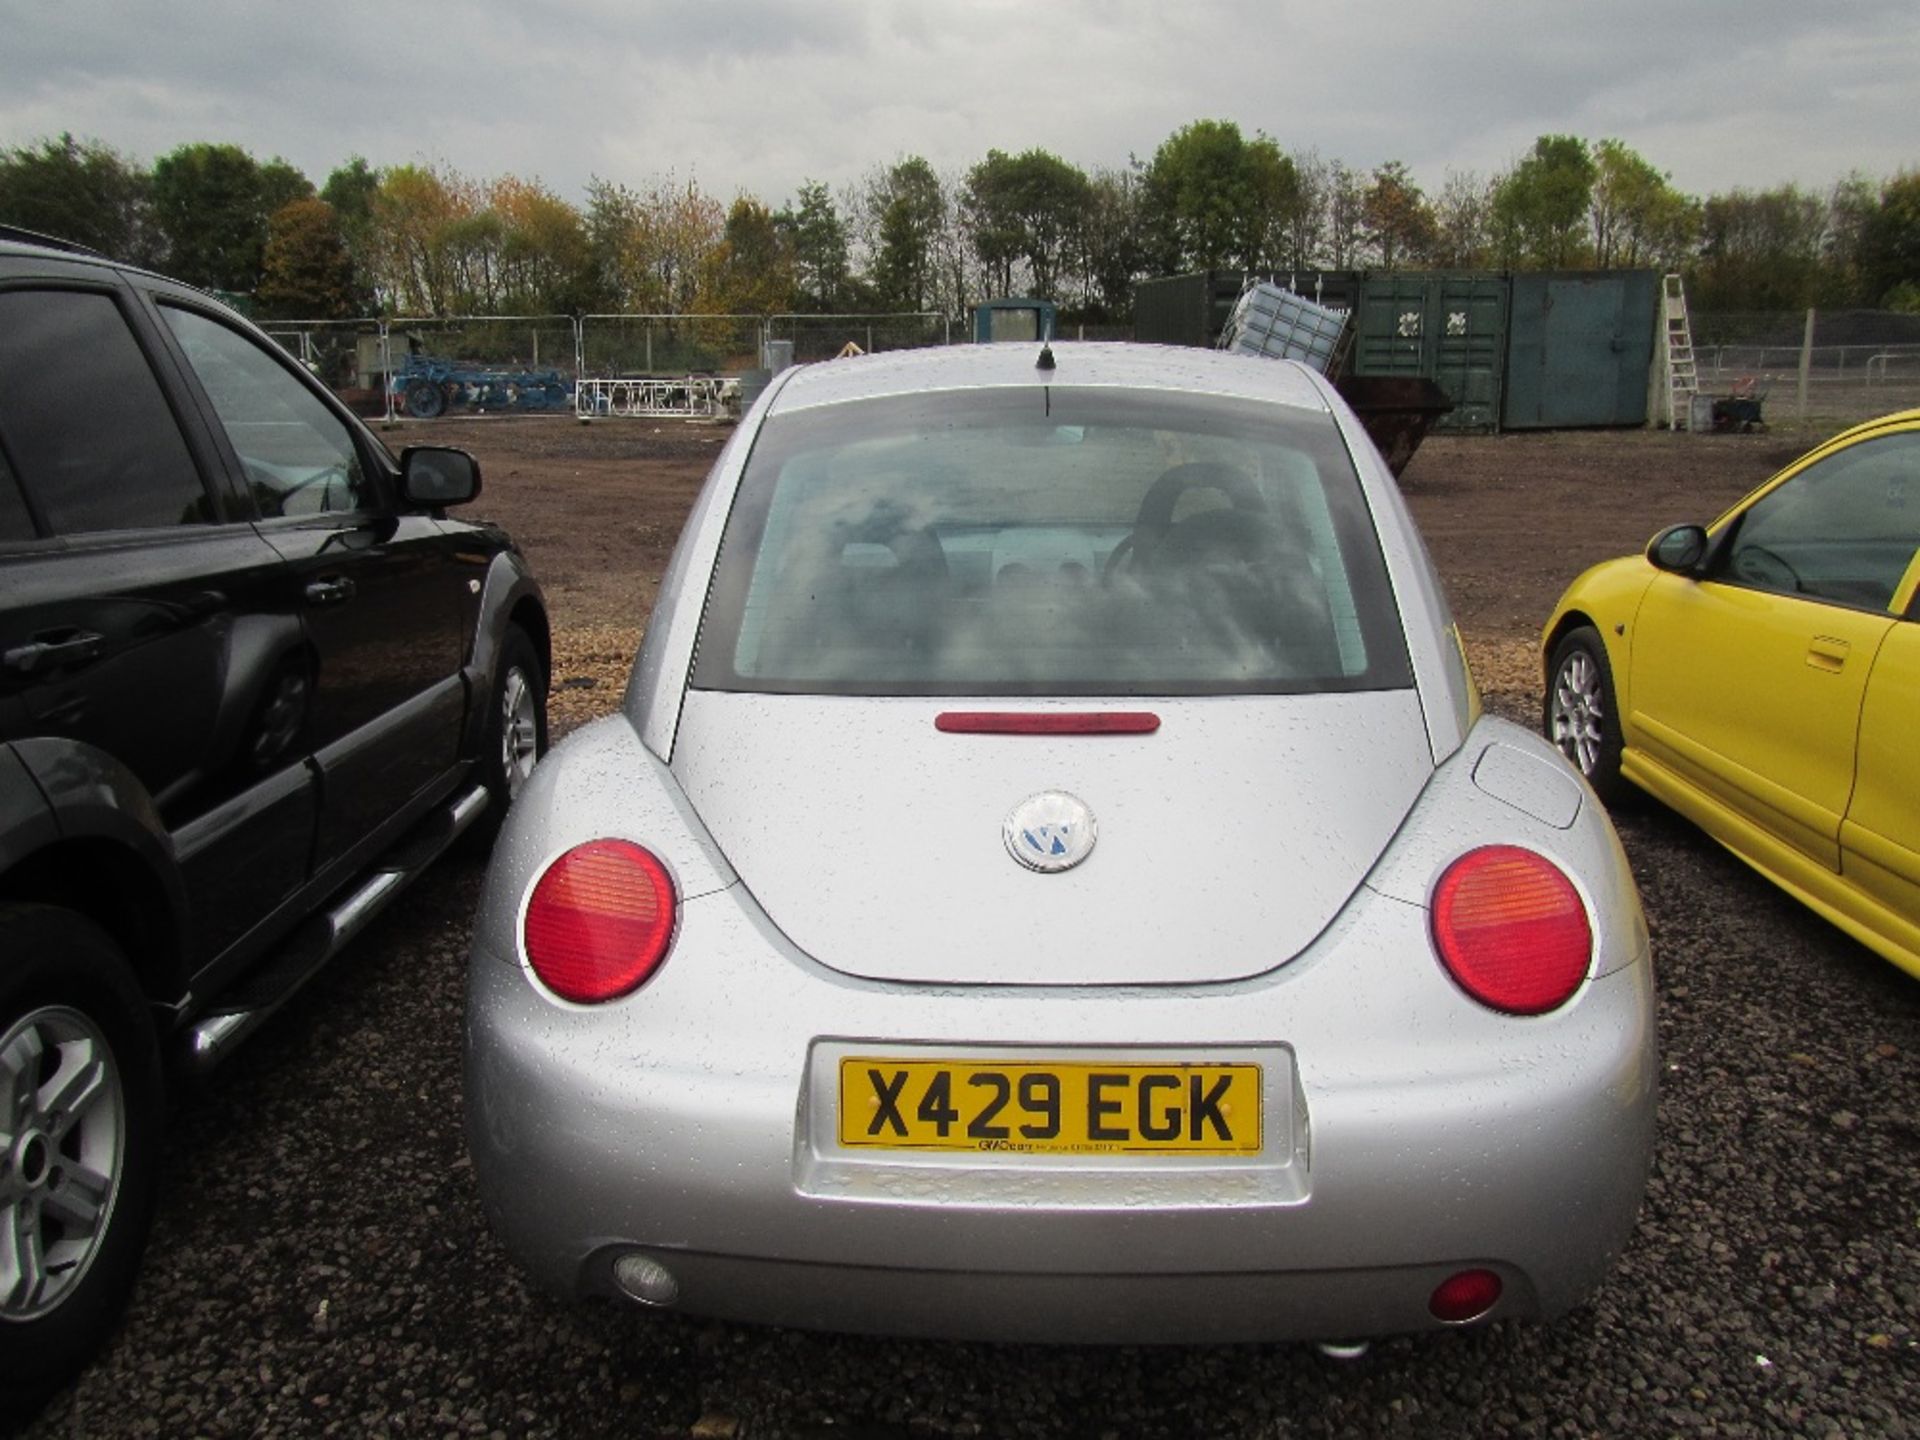 Volkswagon Beetle 2.0 Litre Petrol. Reg Docs will be supplied. Mileage: 88,383. MOT till 5/6/17. - Image 4 of 5